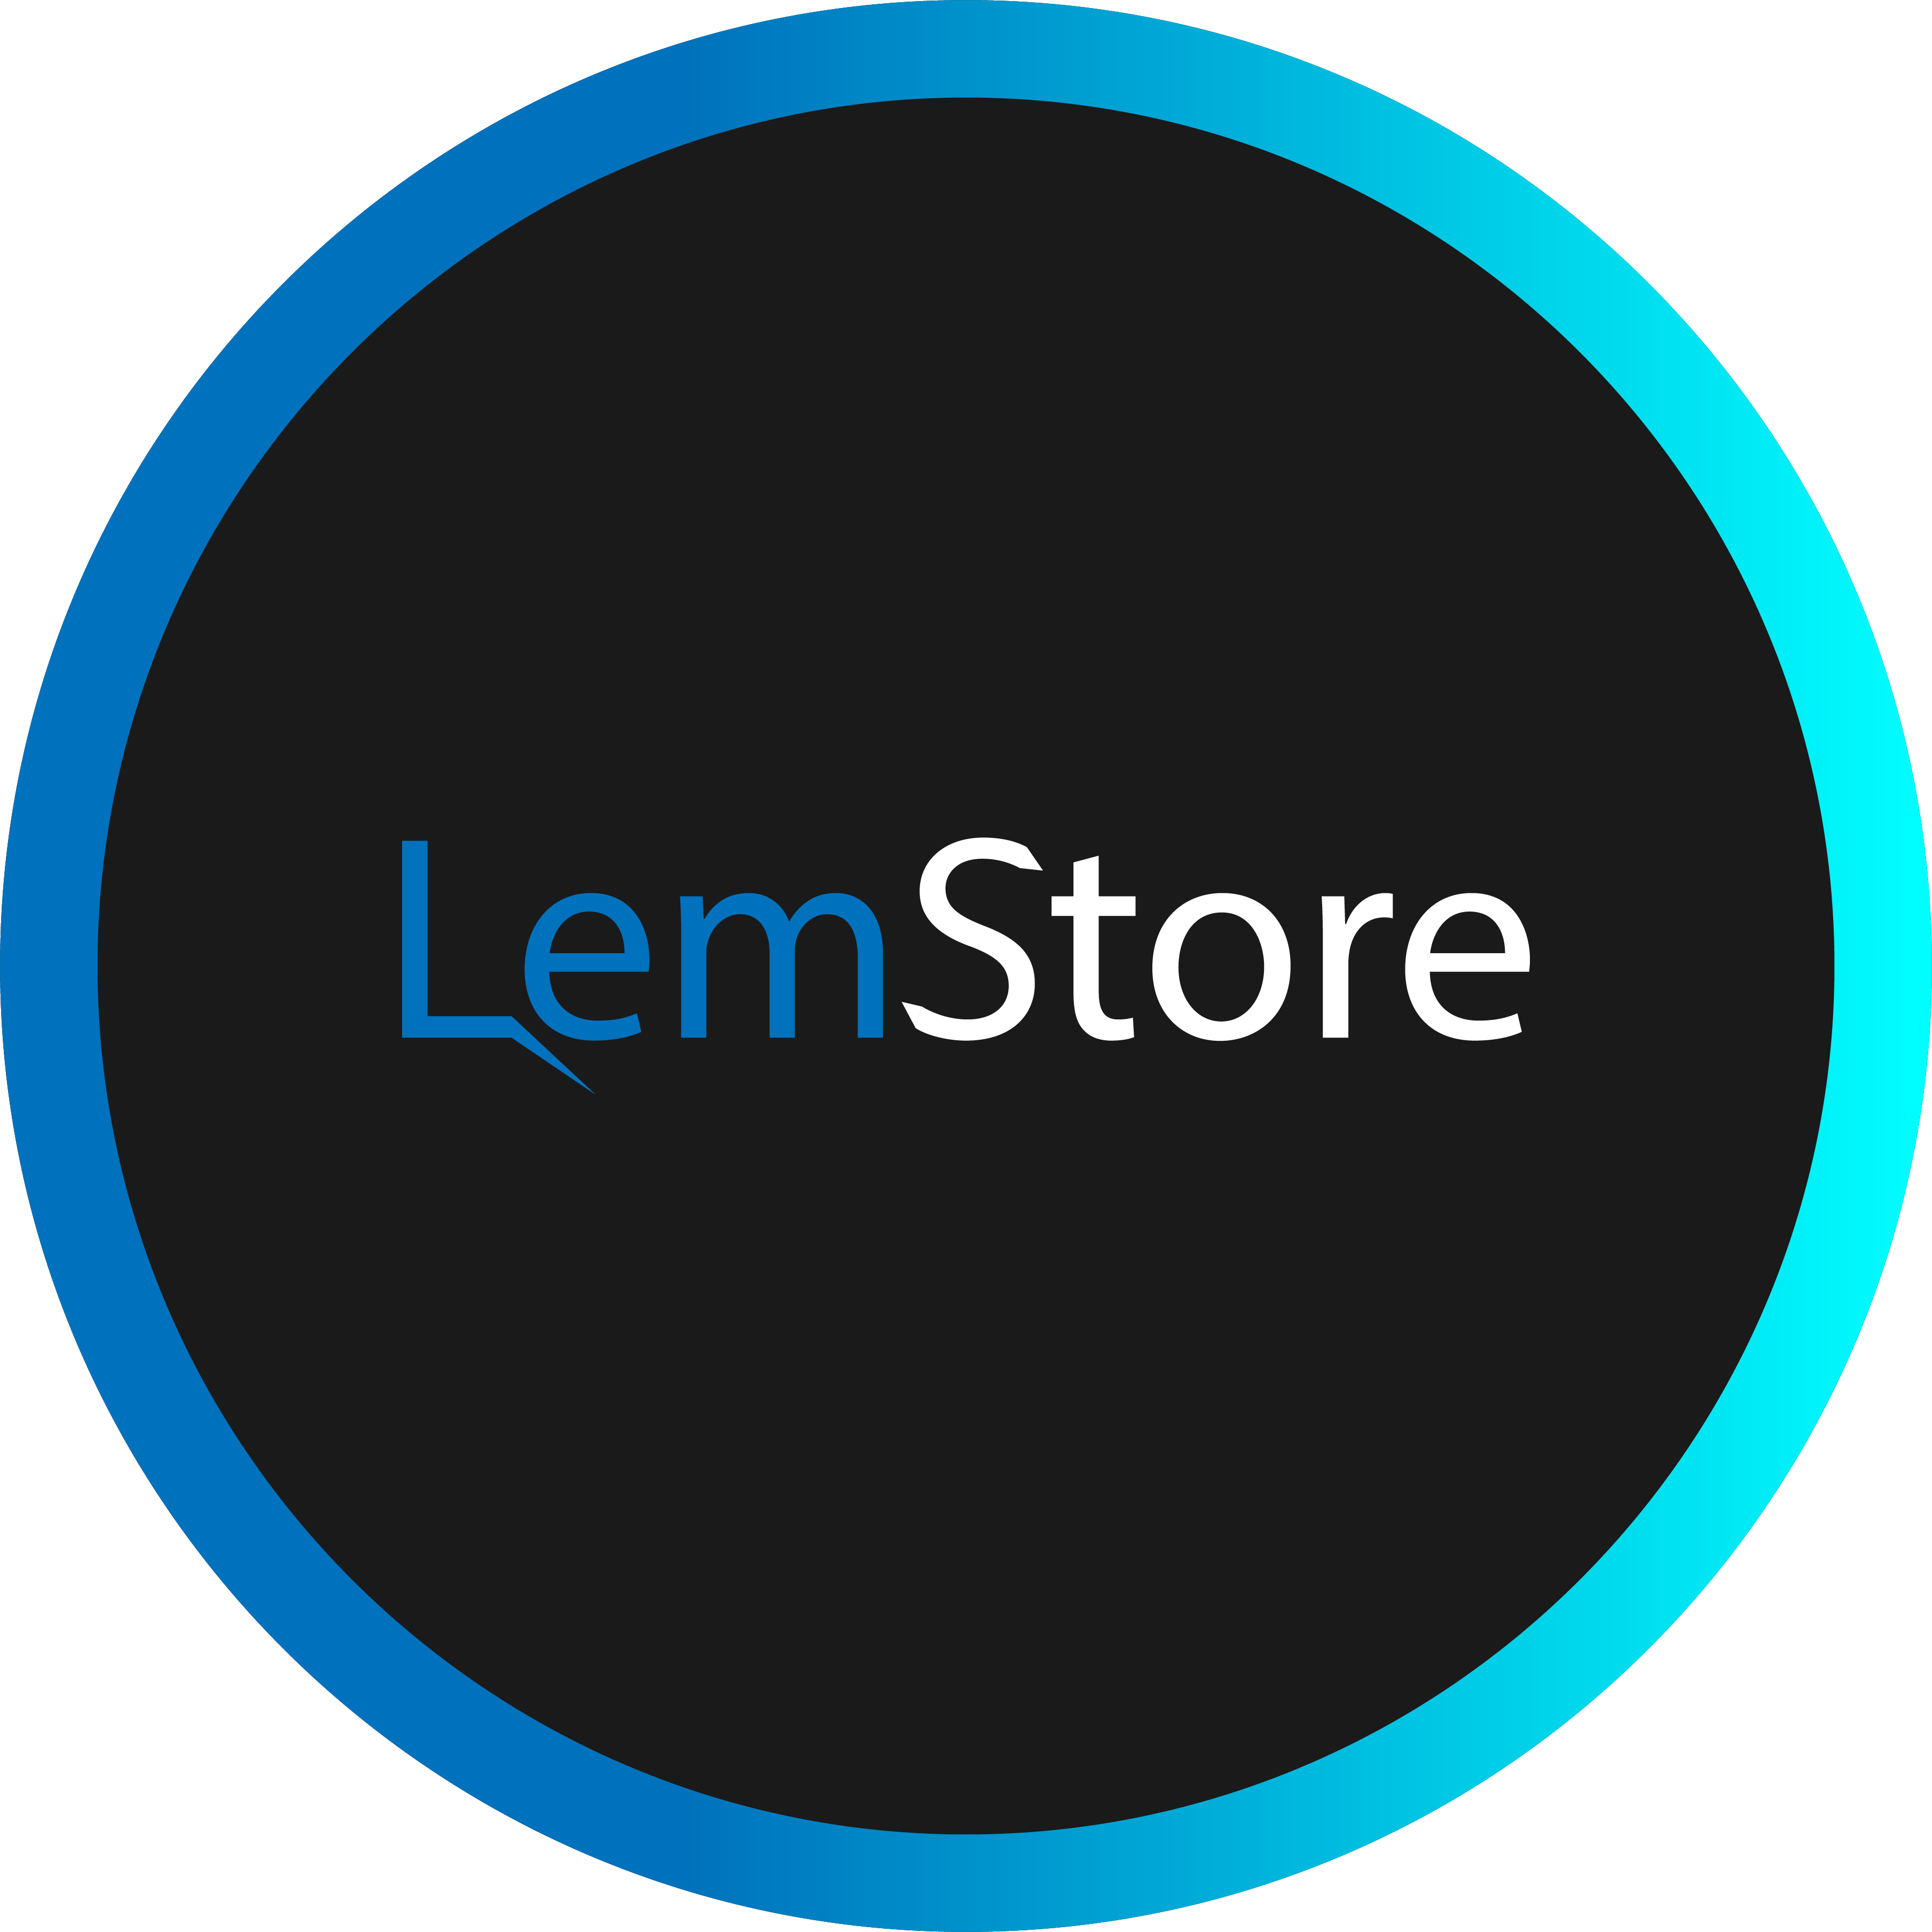 LemStore